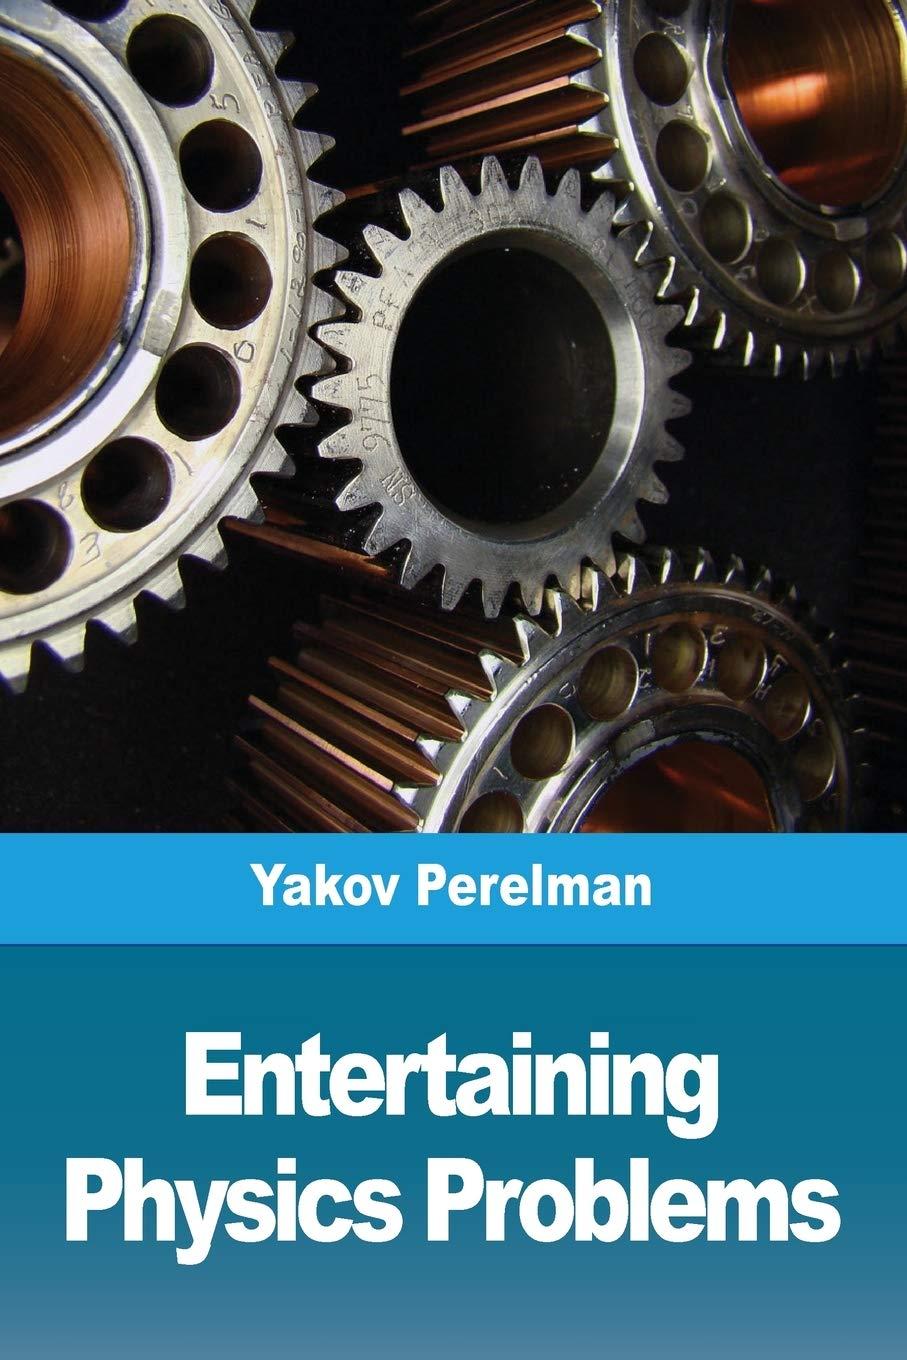 entertaining physics problems 1st edition yakov perelman 2917260610, 978-2917260616